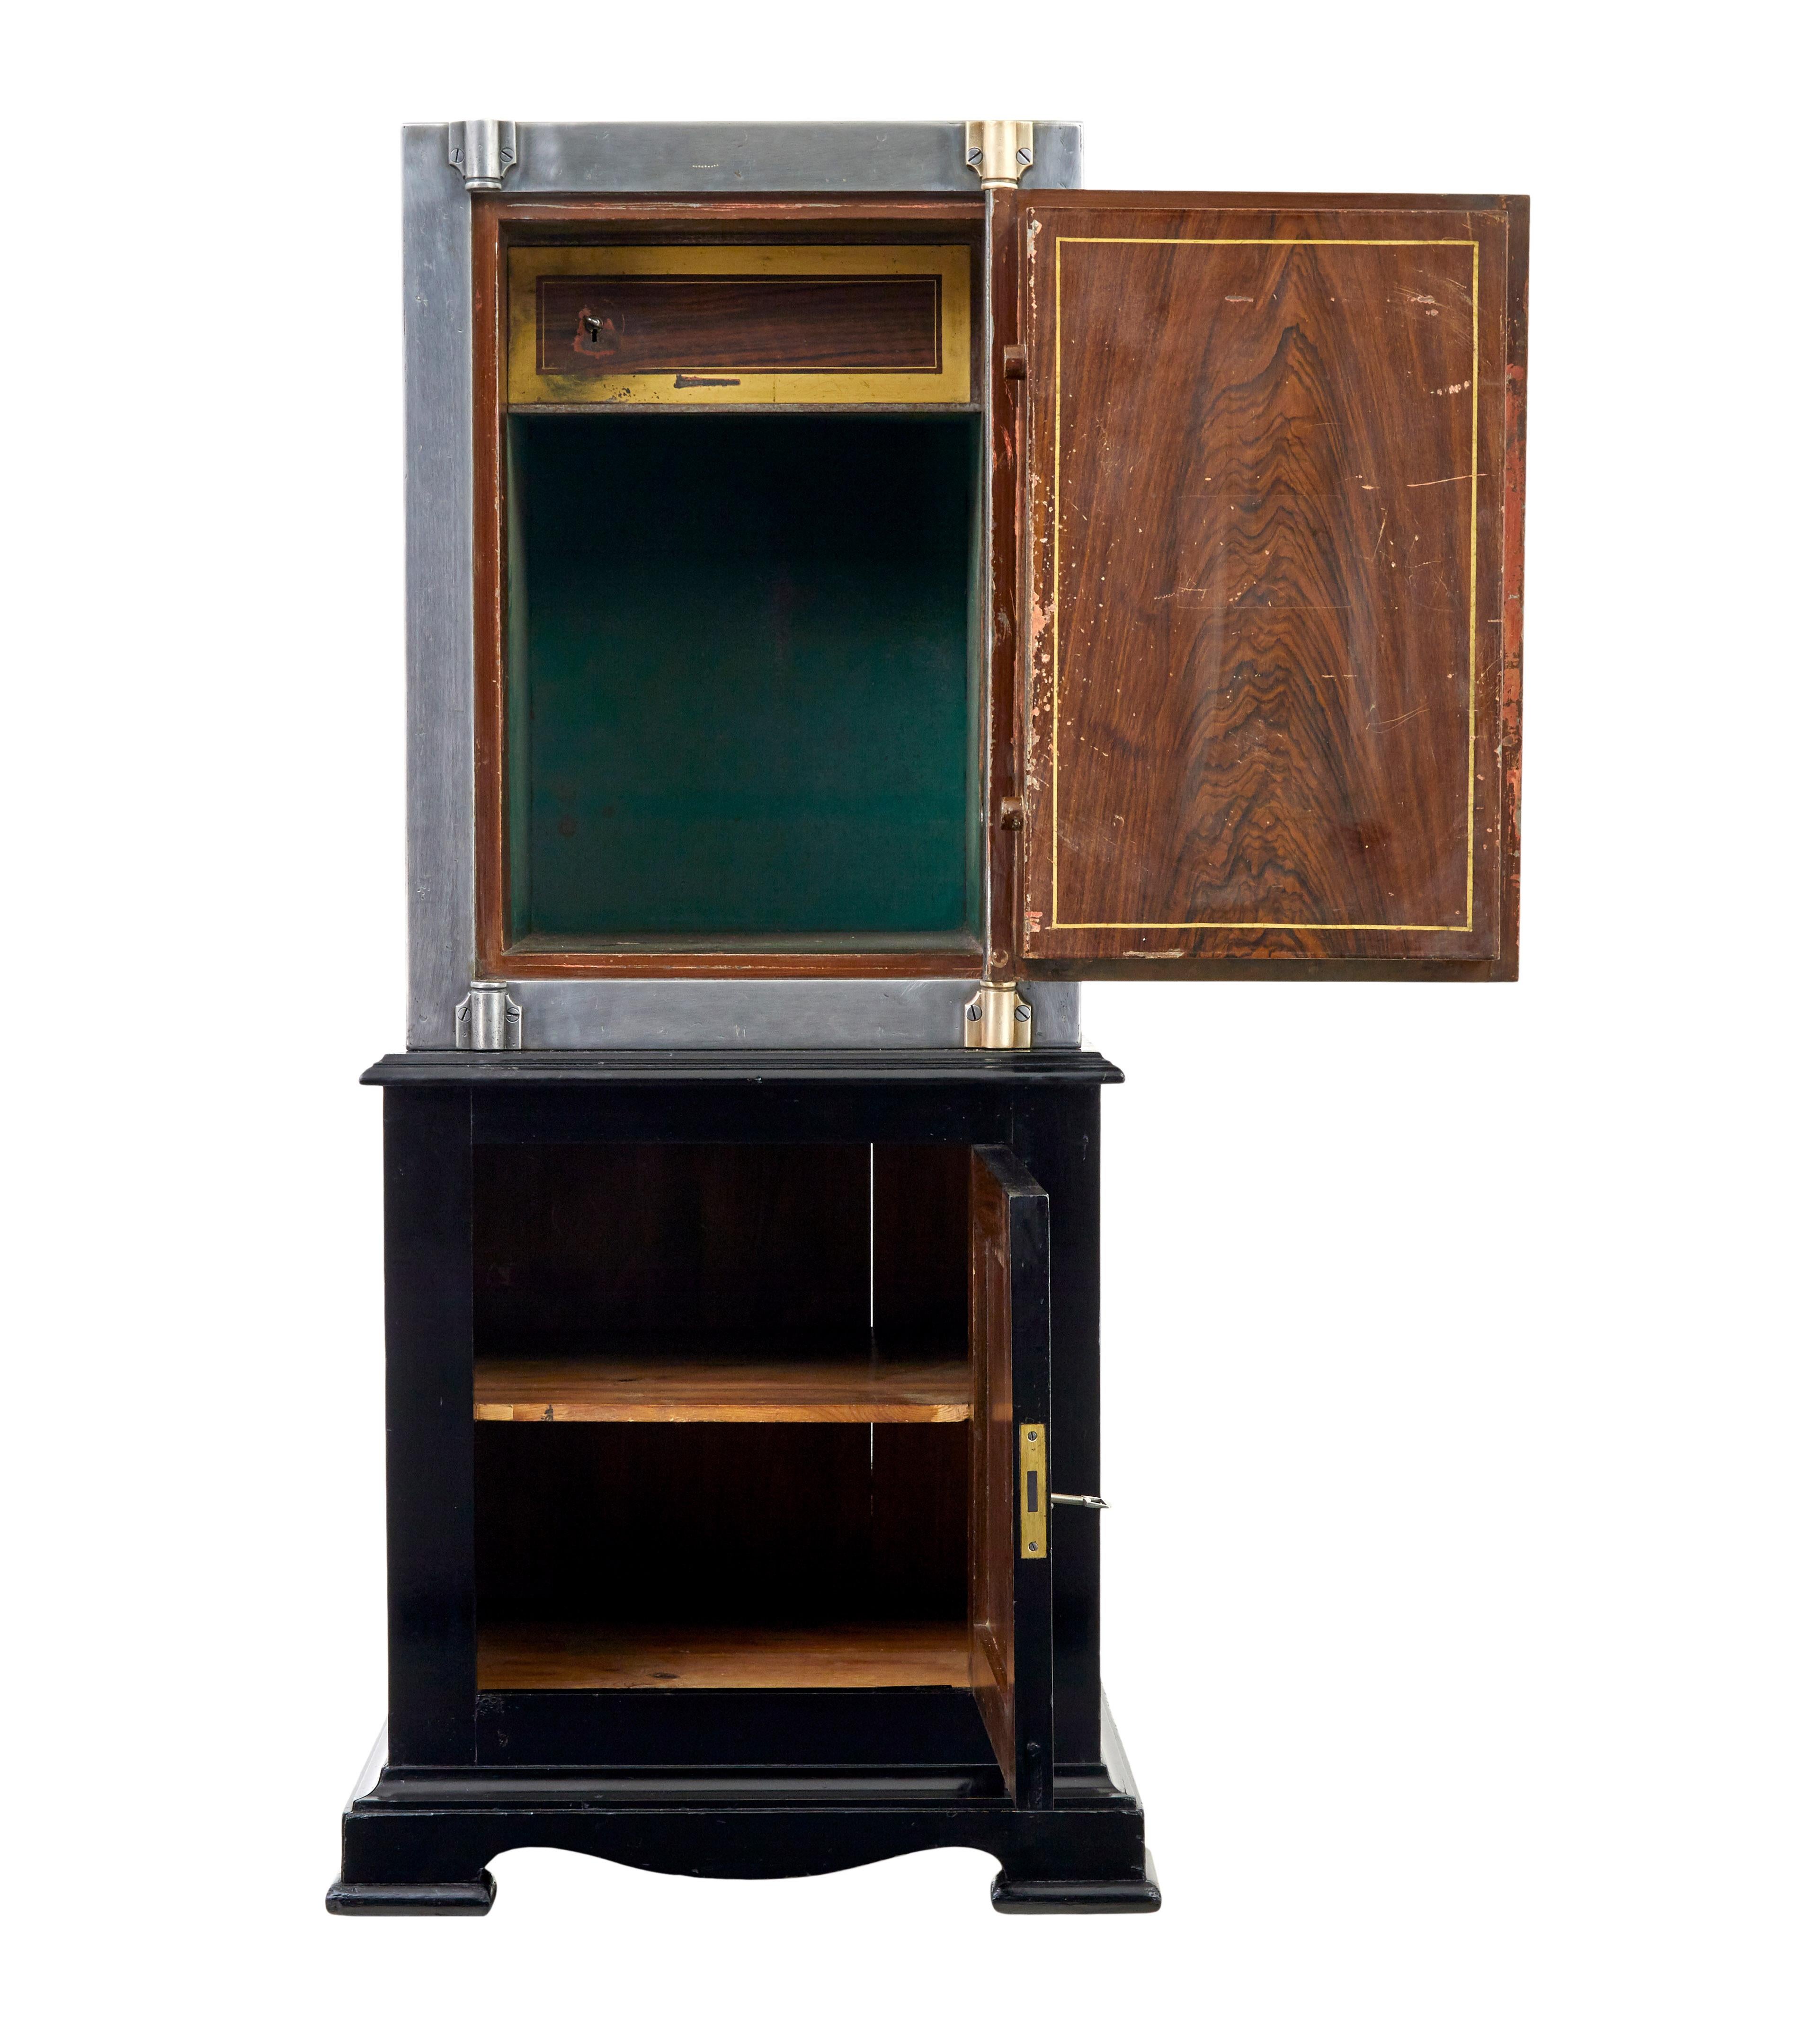 Ebonized 19th century Danish polished steel safe on cabinet For Sale